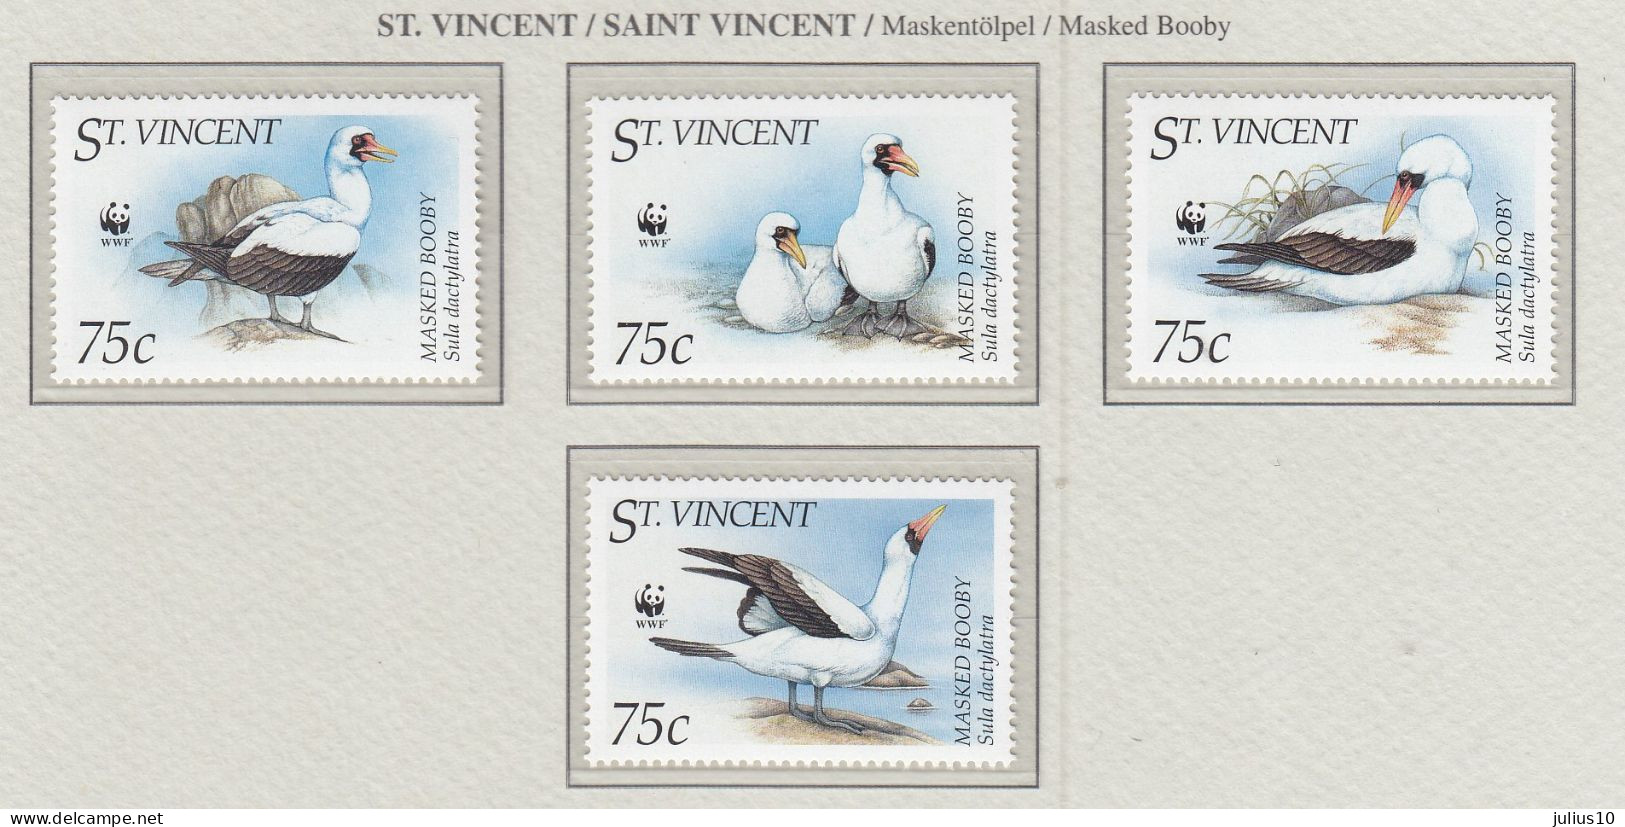 St. VINCENT 1995 WWF Masked Booby Birds Mi 3073 - 3076 MNH(**) Fauna 534 - Albatrosse & Sturmvögel